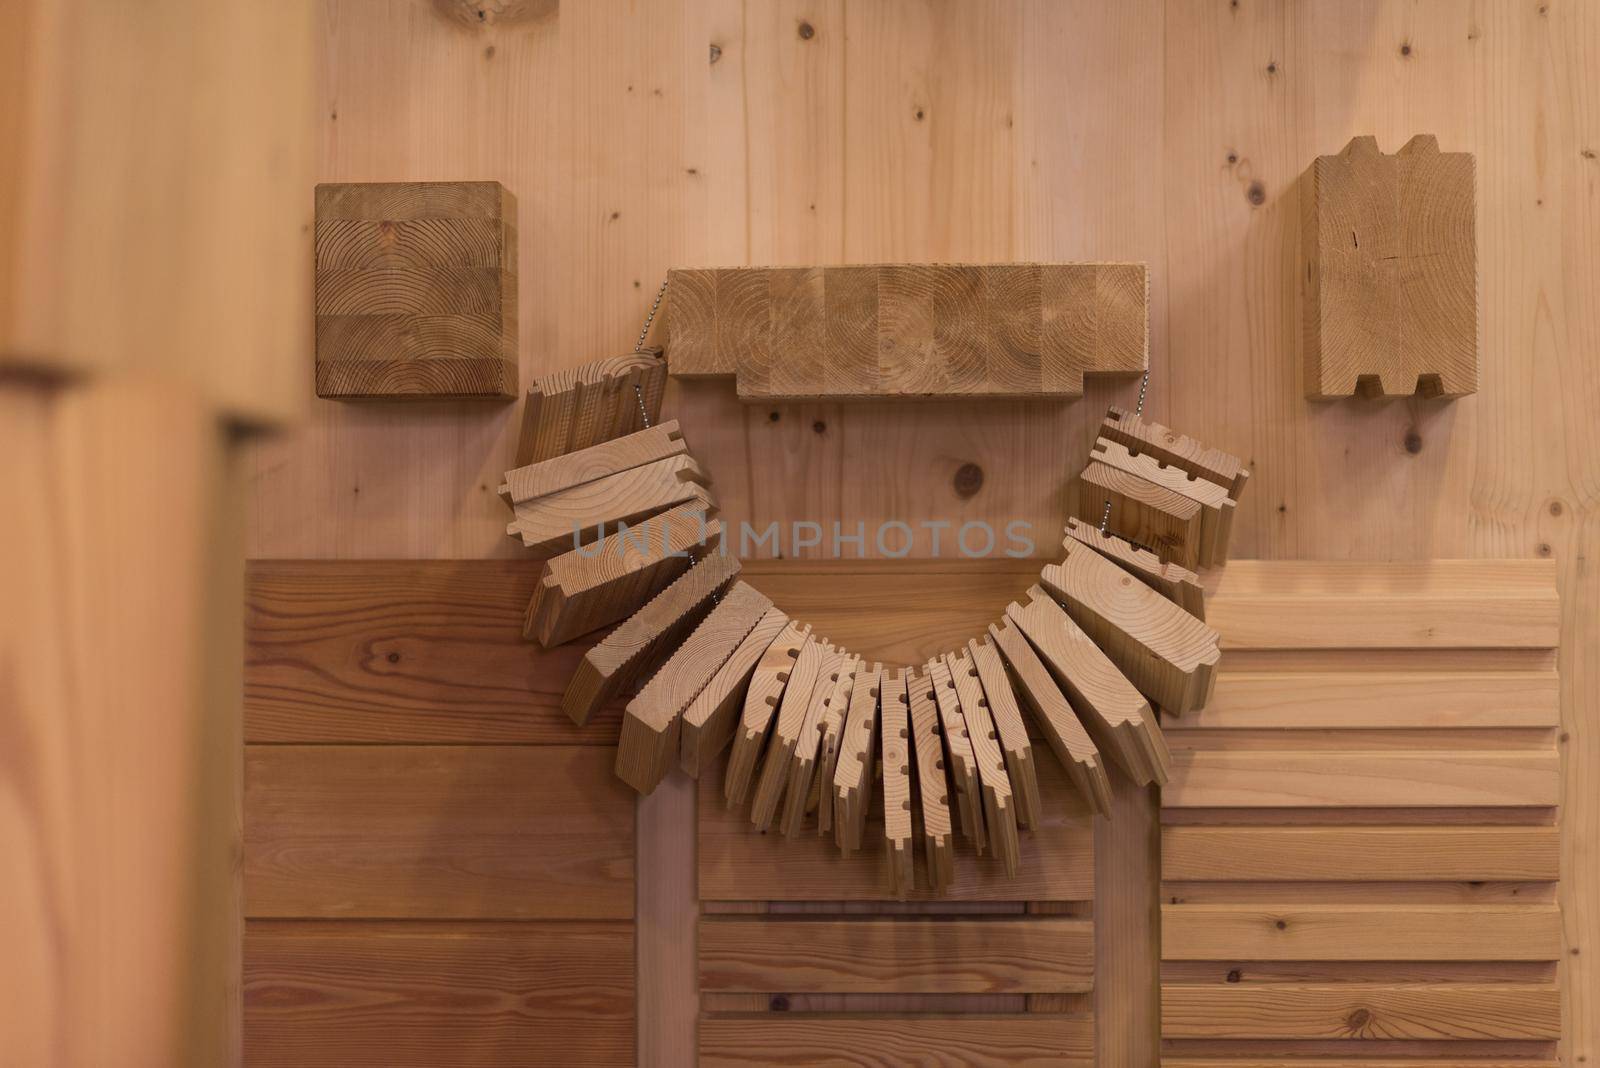 samples of wooden furniture by dotshock